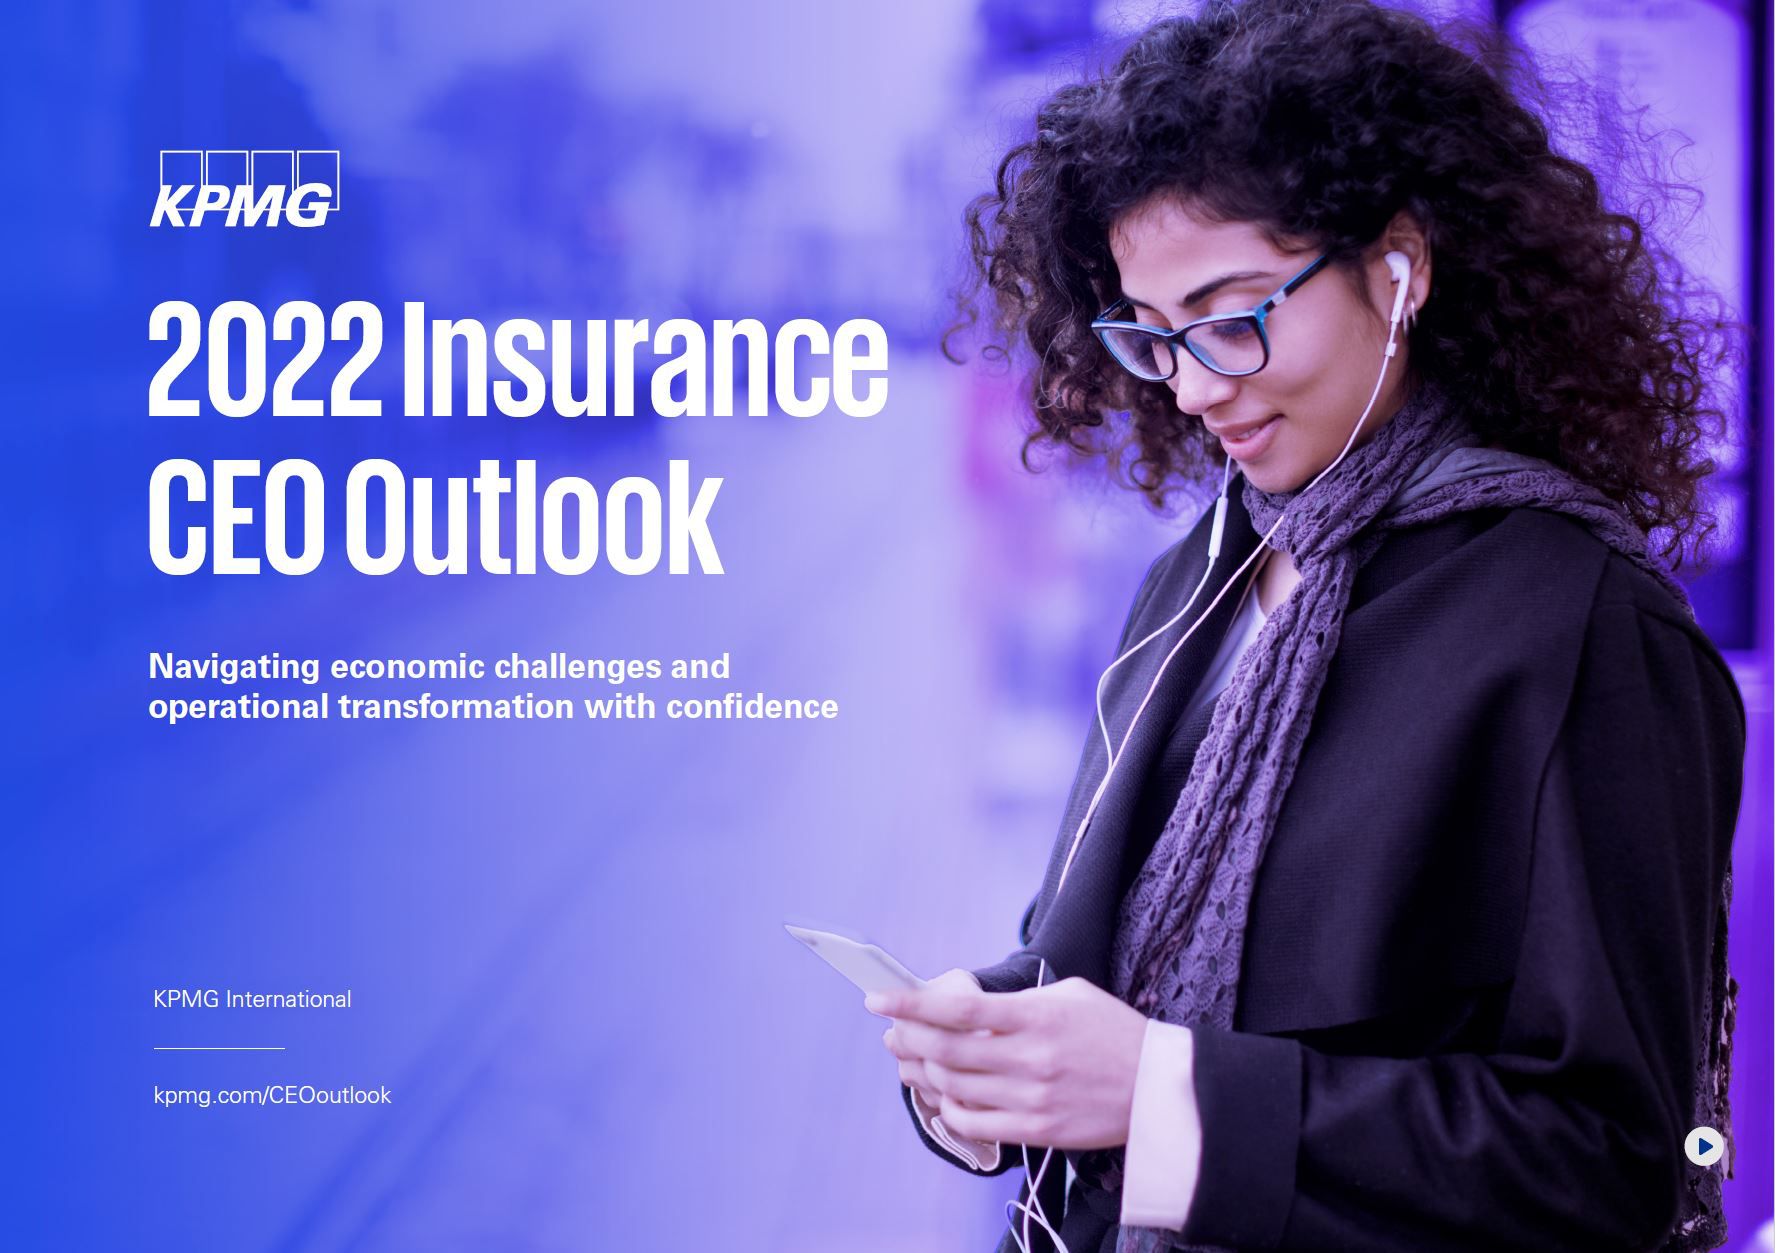 KPMG 2022 Insurance CEO Outlook